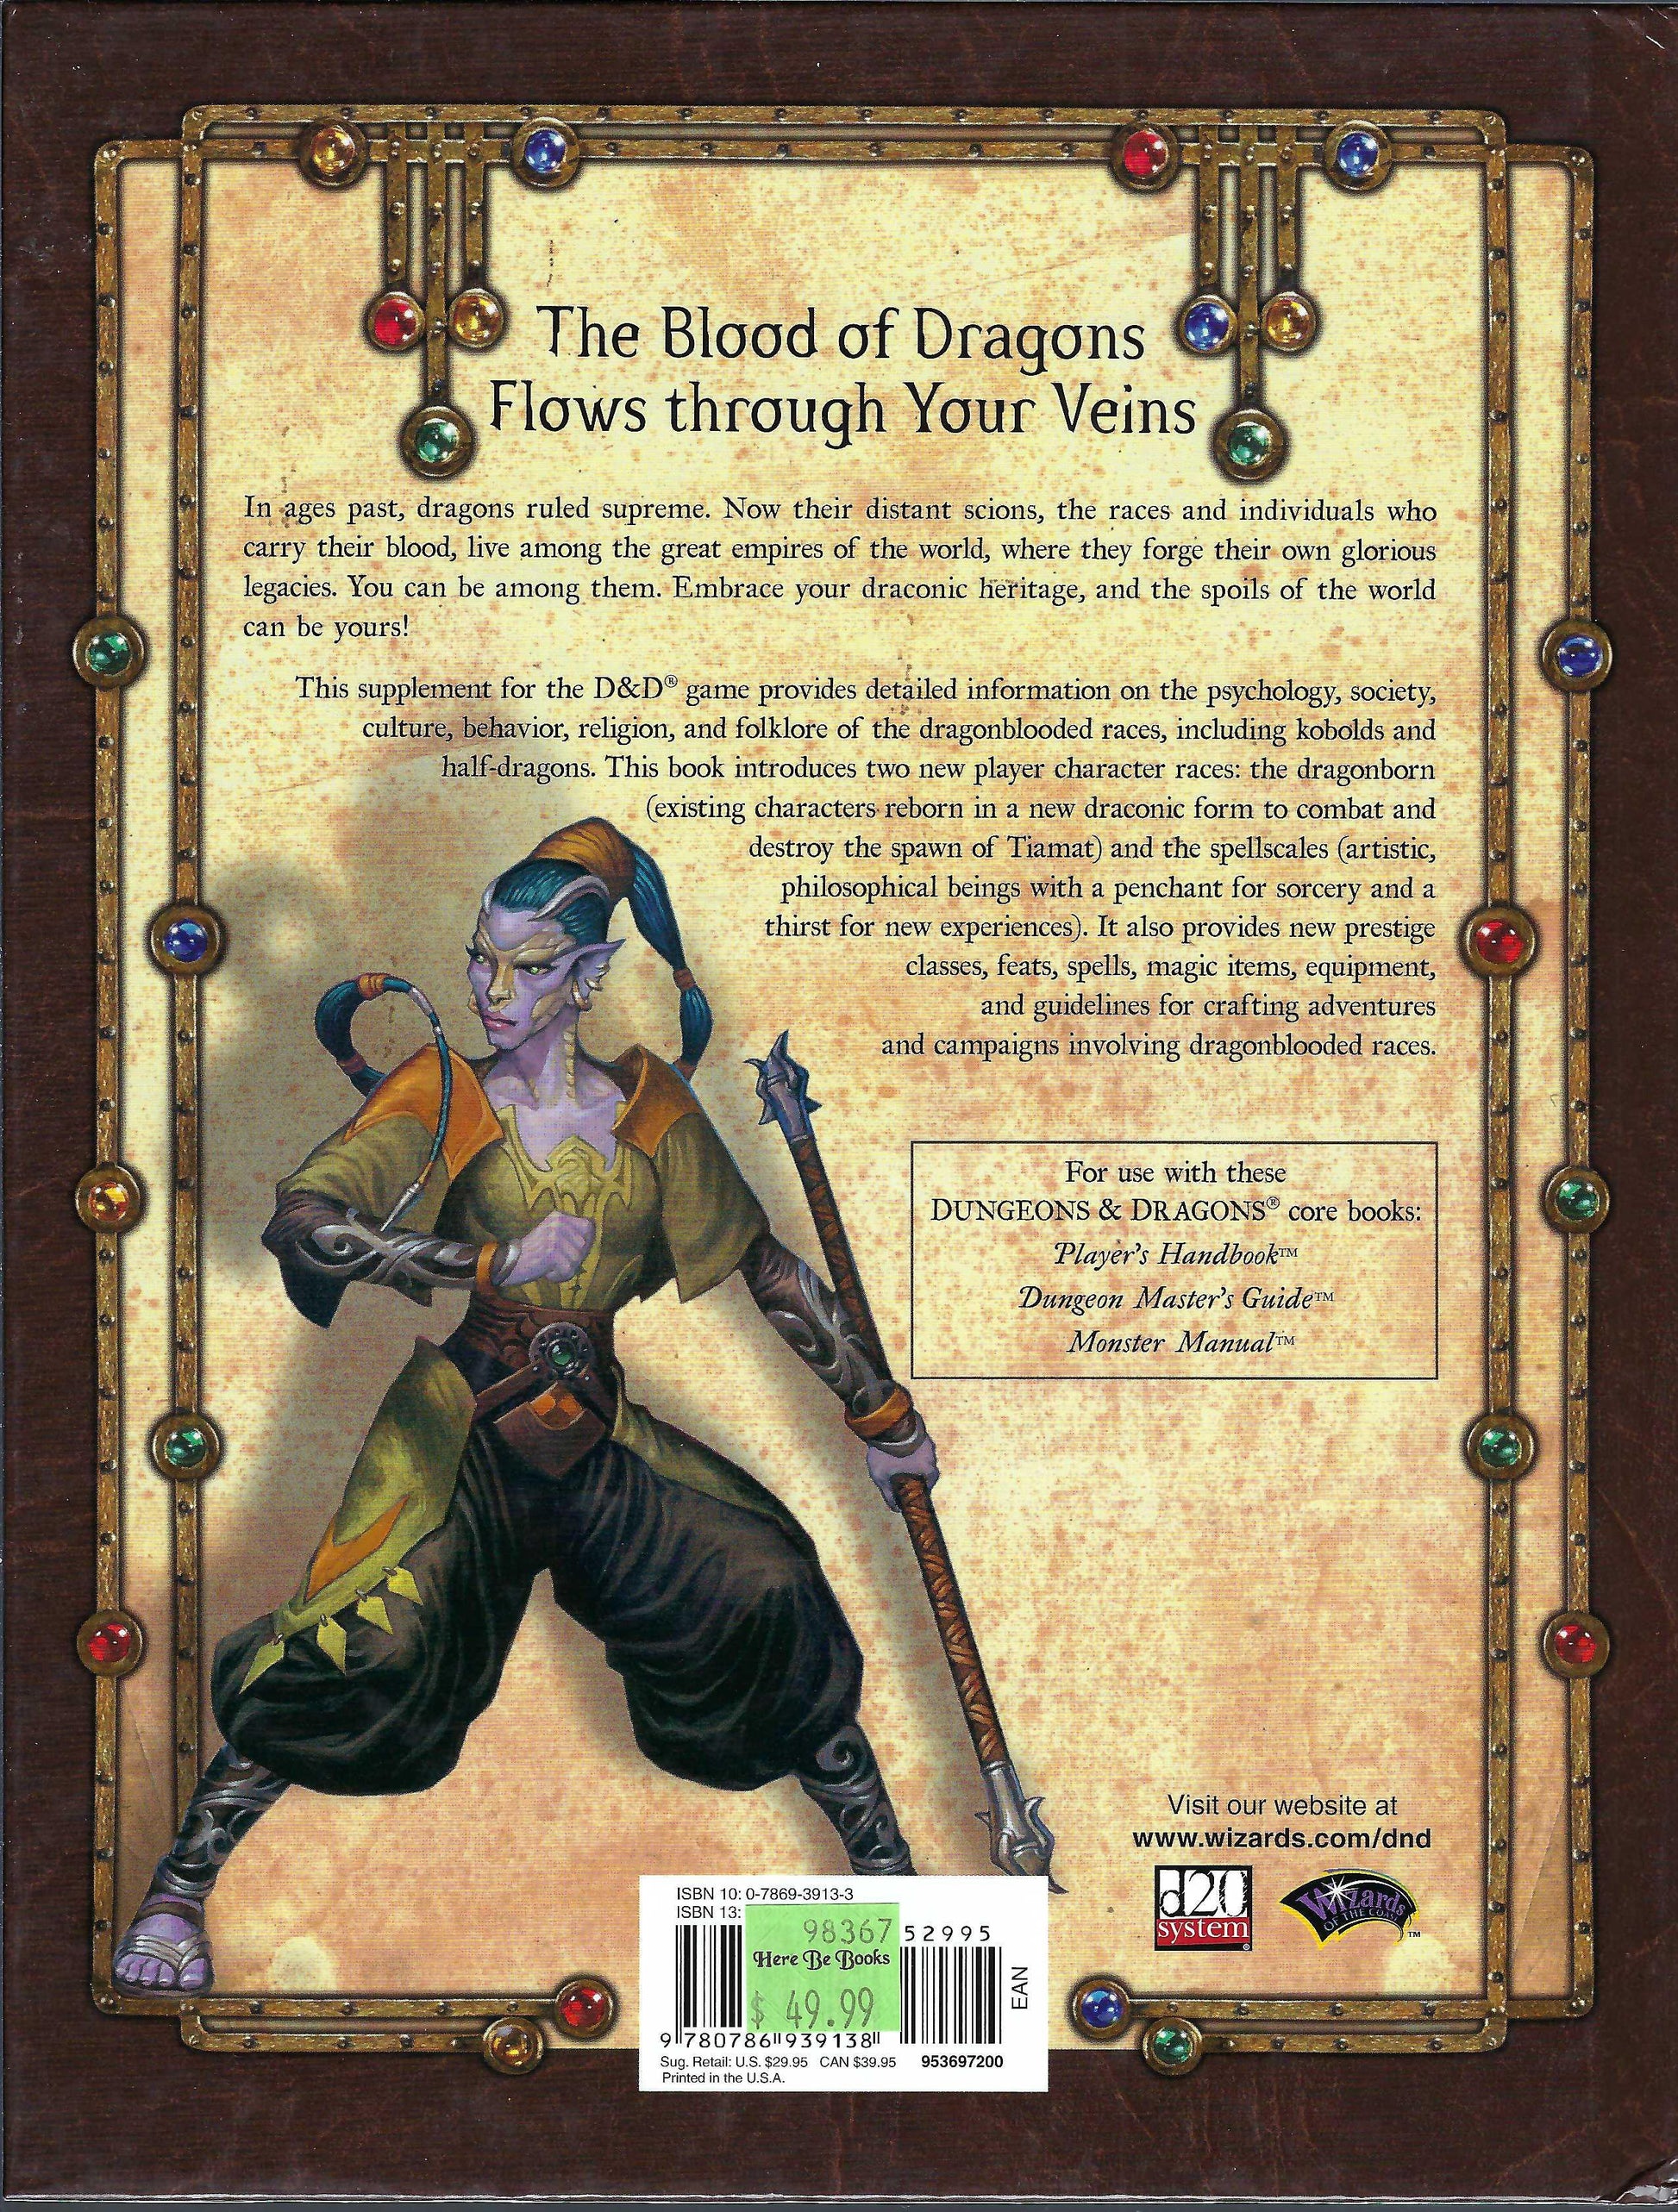 Dragon - Individual Character Meeple